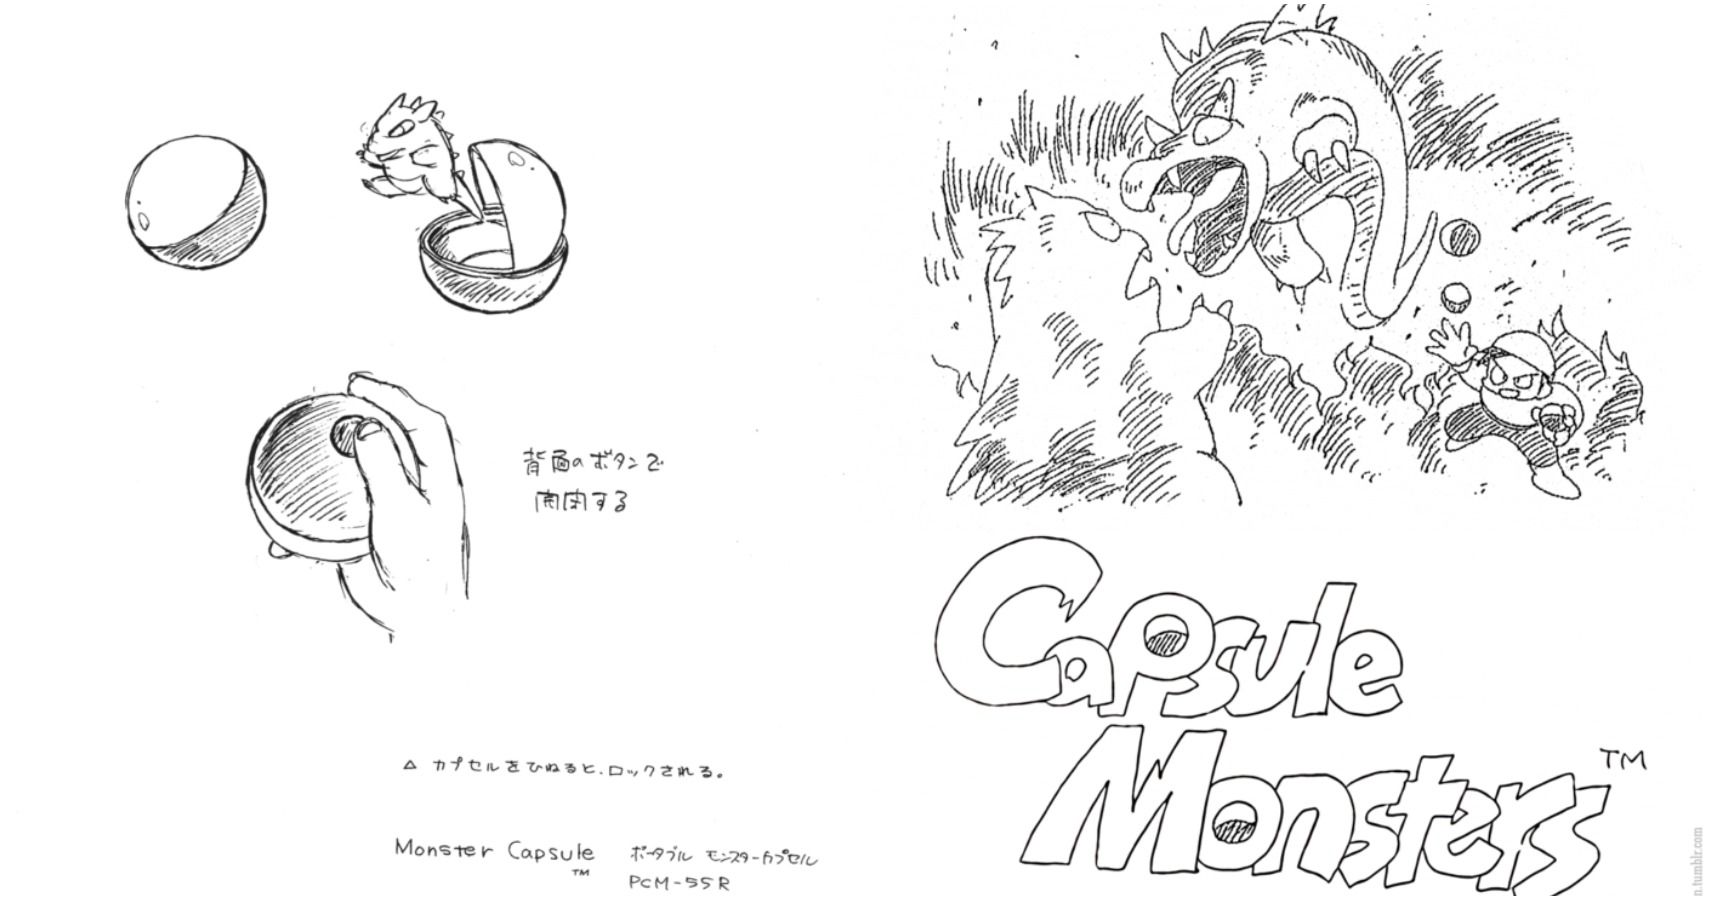 Some sketches Ken Sugimori put up on his twitter  post  ポケモンスケッチ  ポケモンファンアート ポケモンの描き方